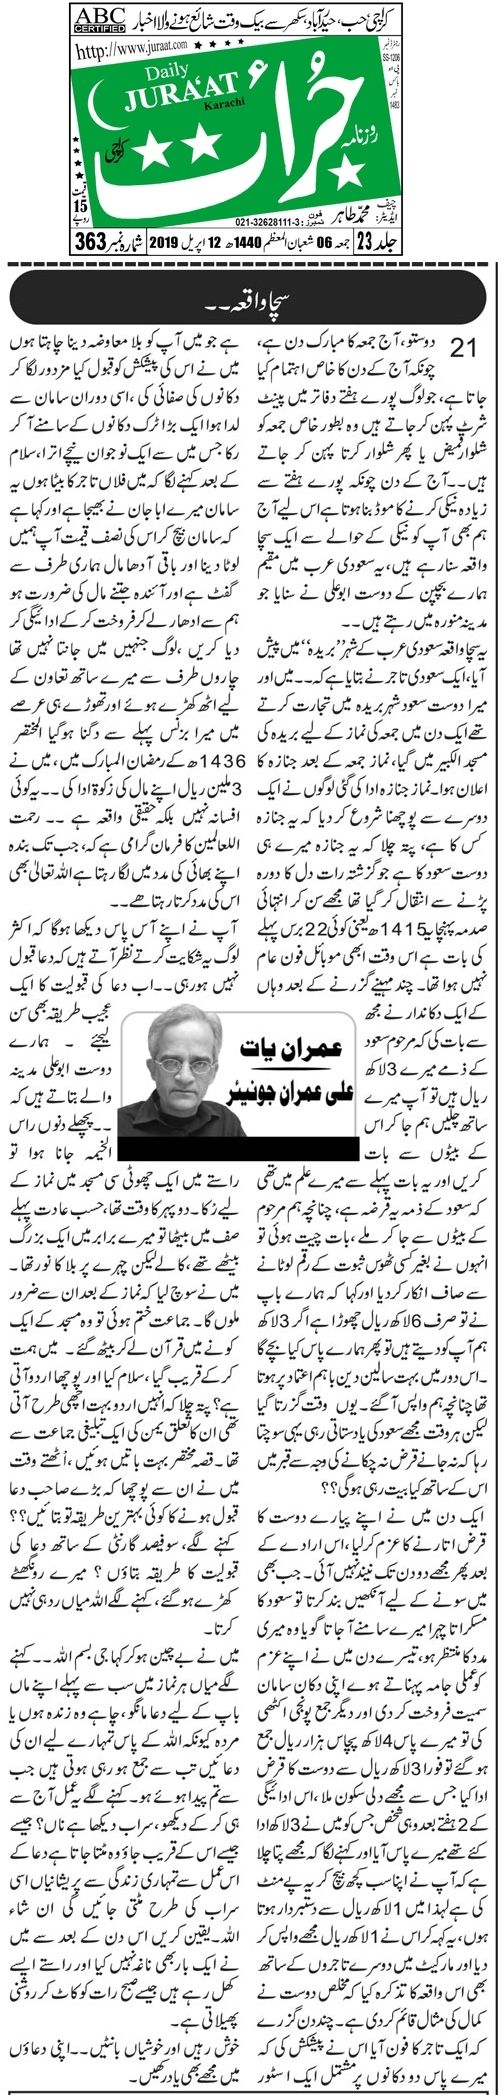 Sacha Waqia By Ali Imran Junior Imran yaat Daily Jurrat